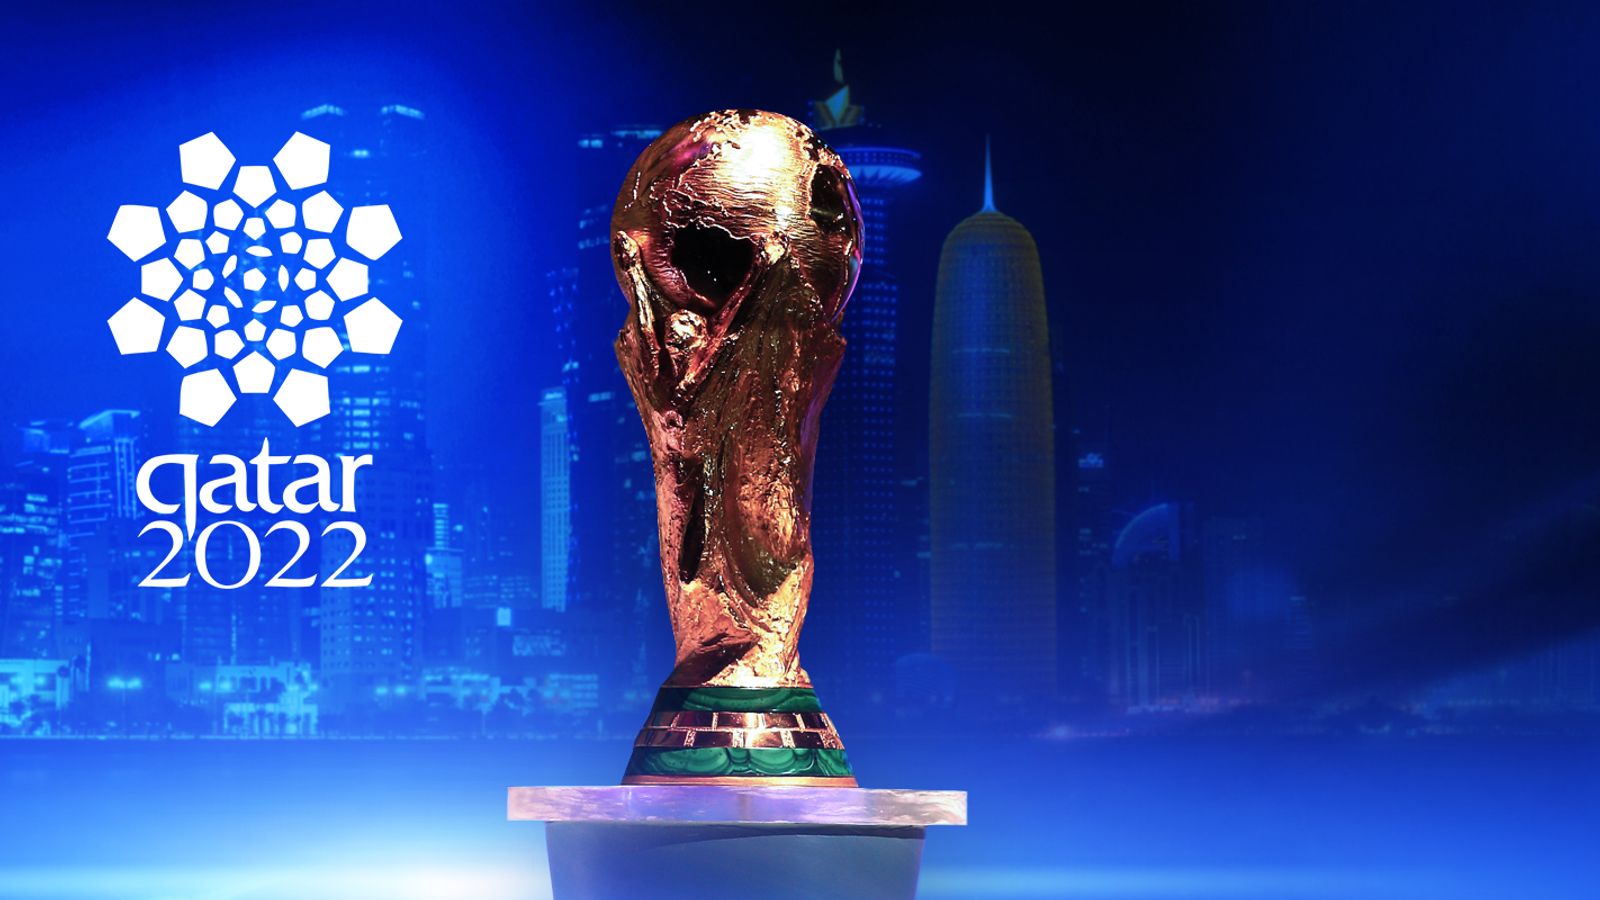 The Official FIFA World Cup Qatar 2022™ Theme